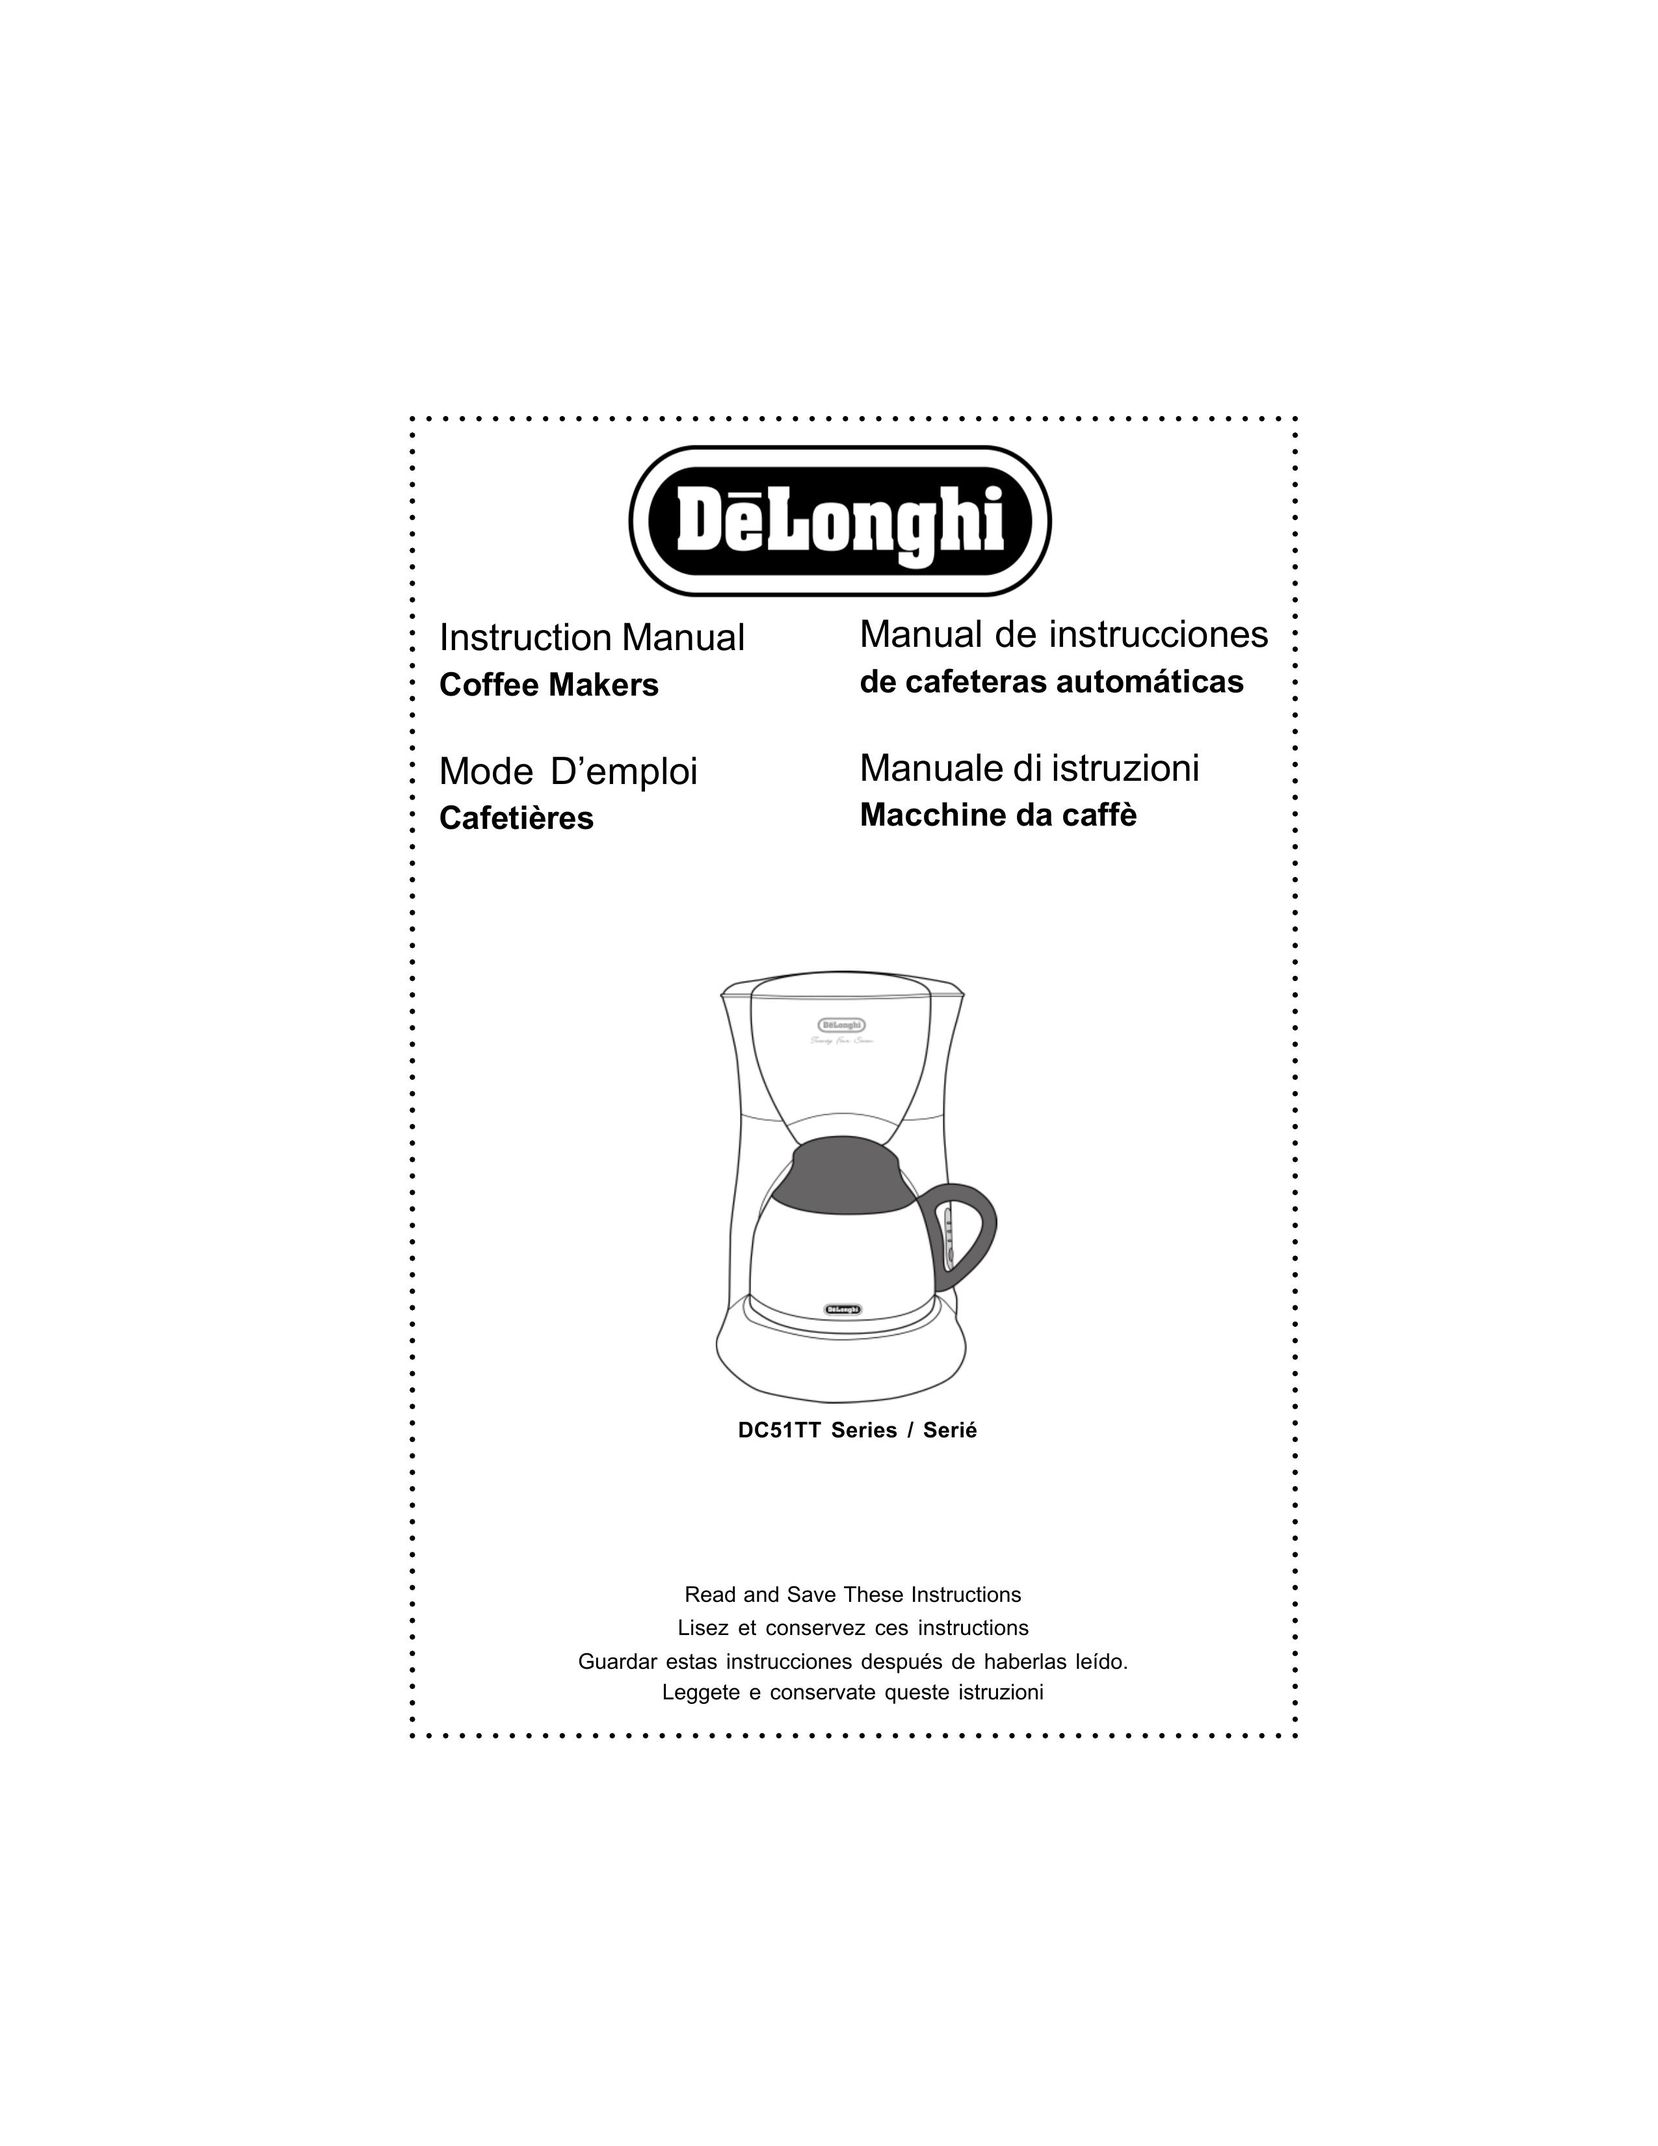 DeLonghi Coffee Makers Coffeemaker User Manual